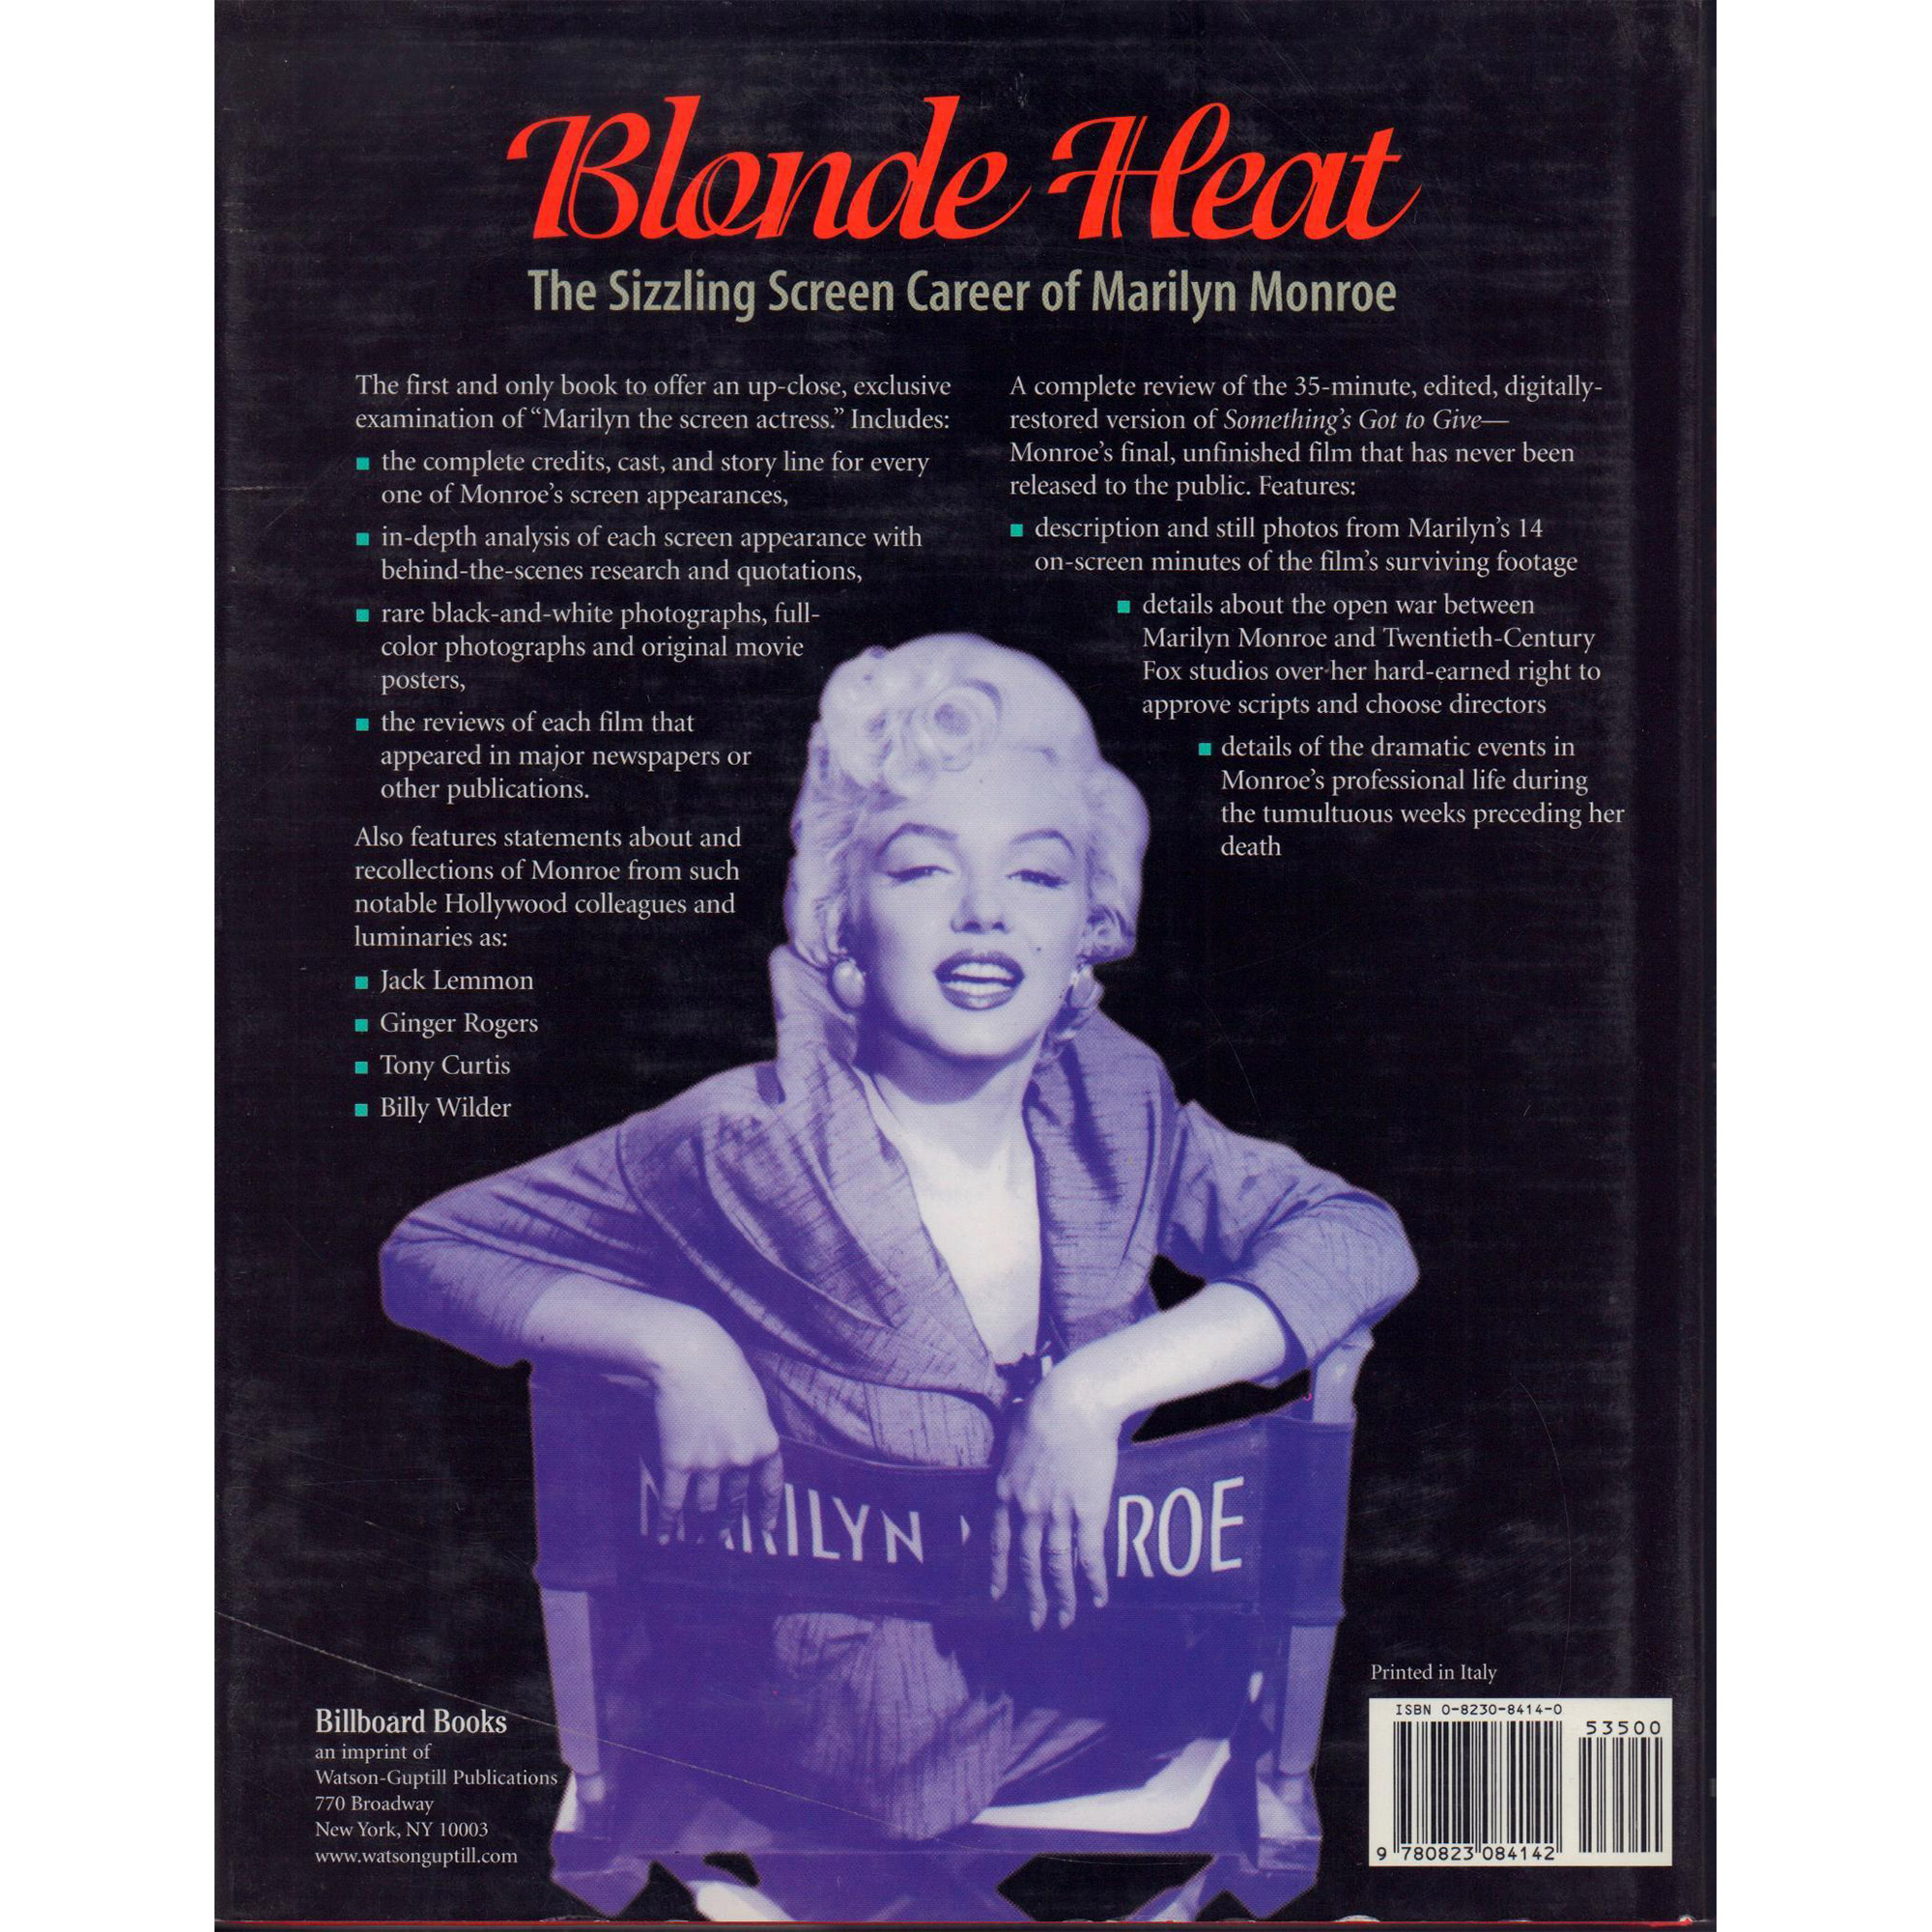 Hardcover Book, Blonde Heat - Image 2 of 2